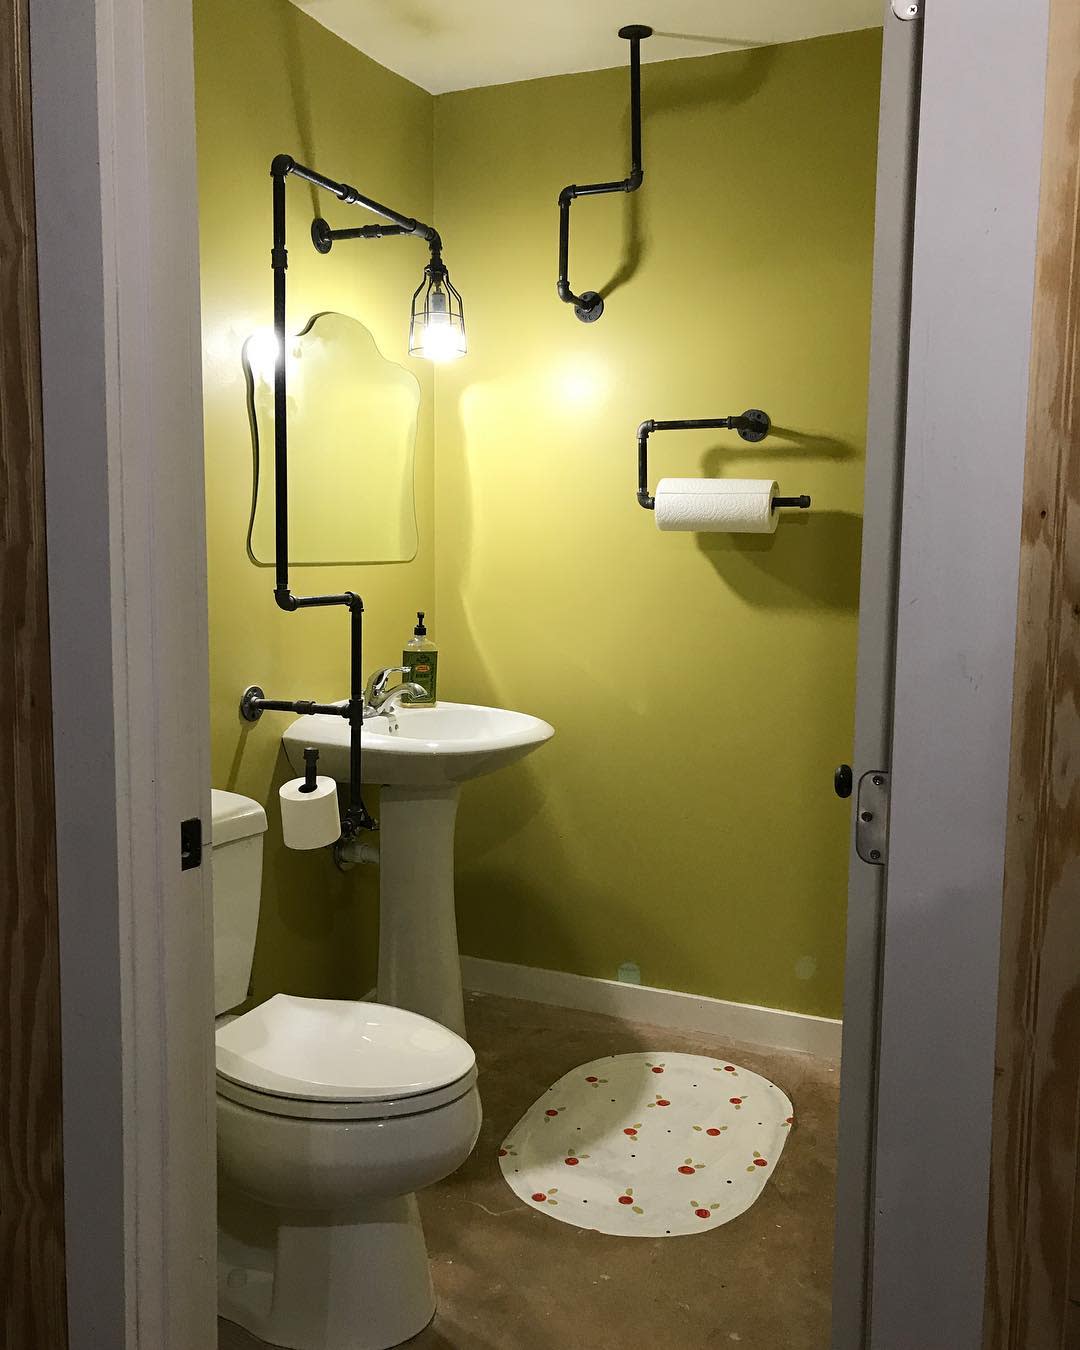 abstract bathroom design